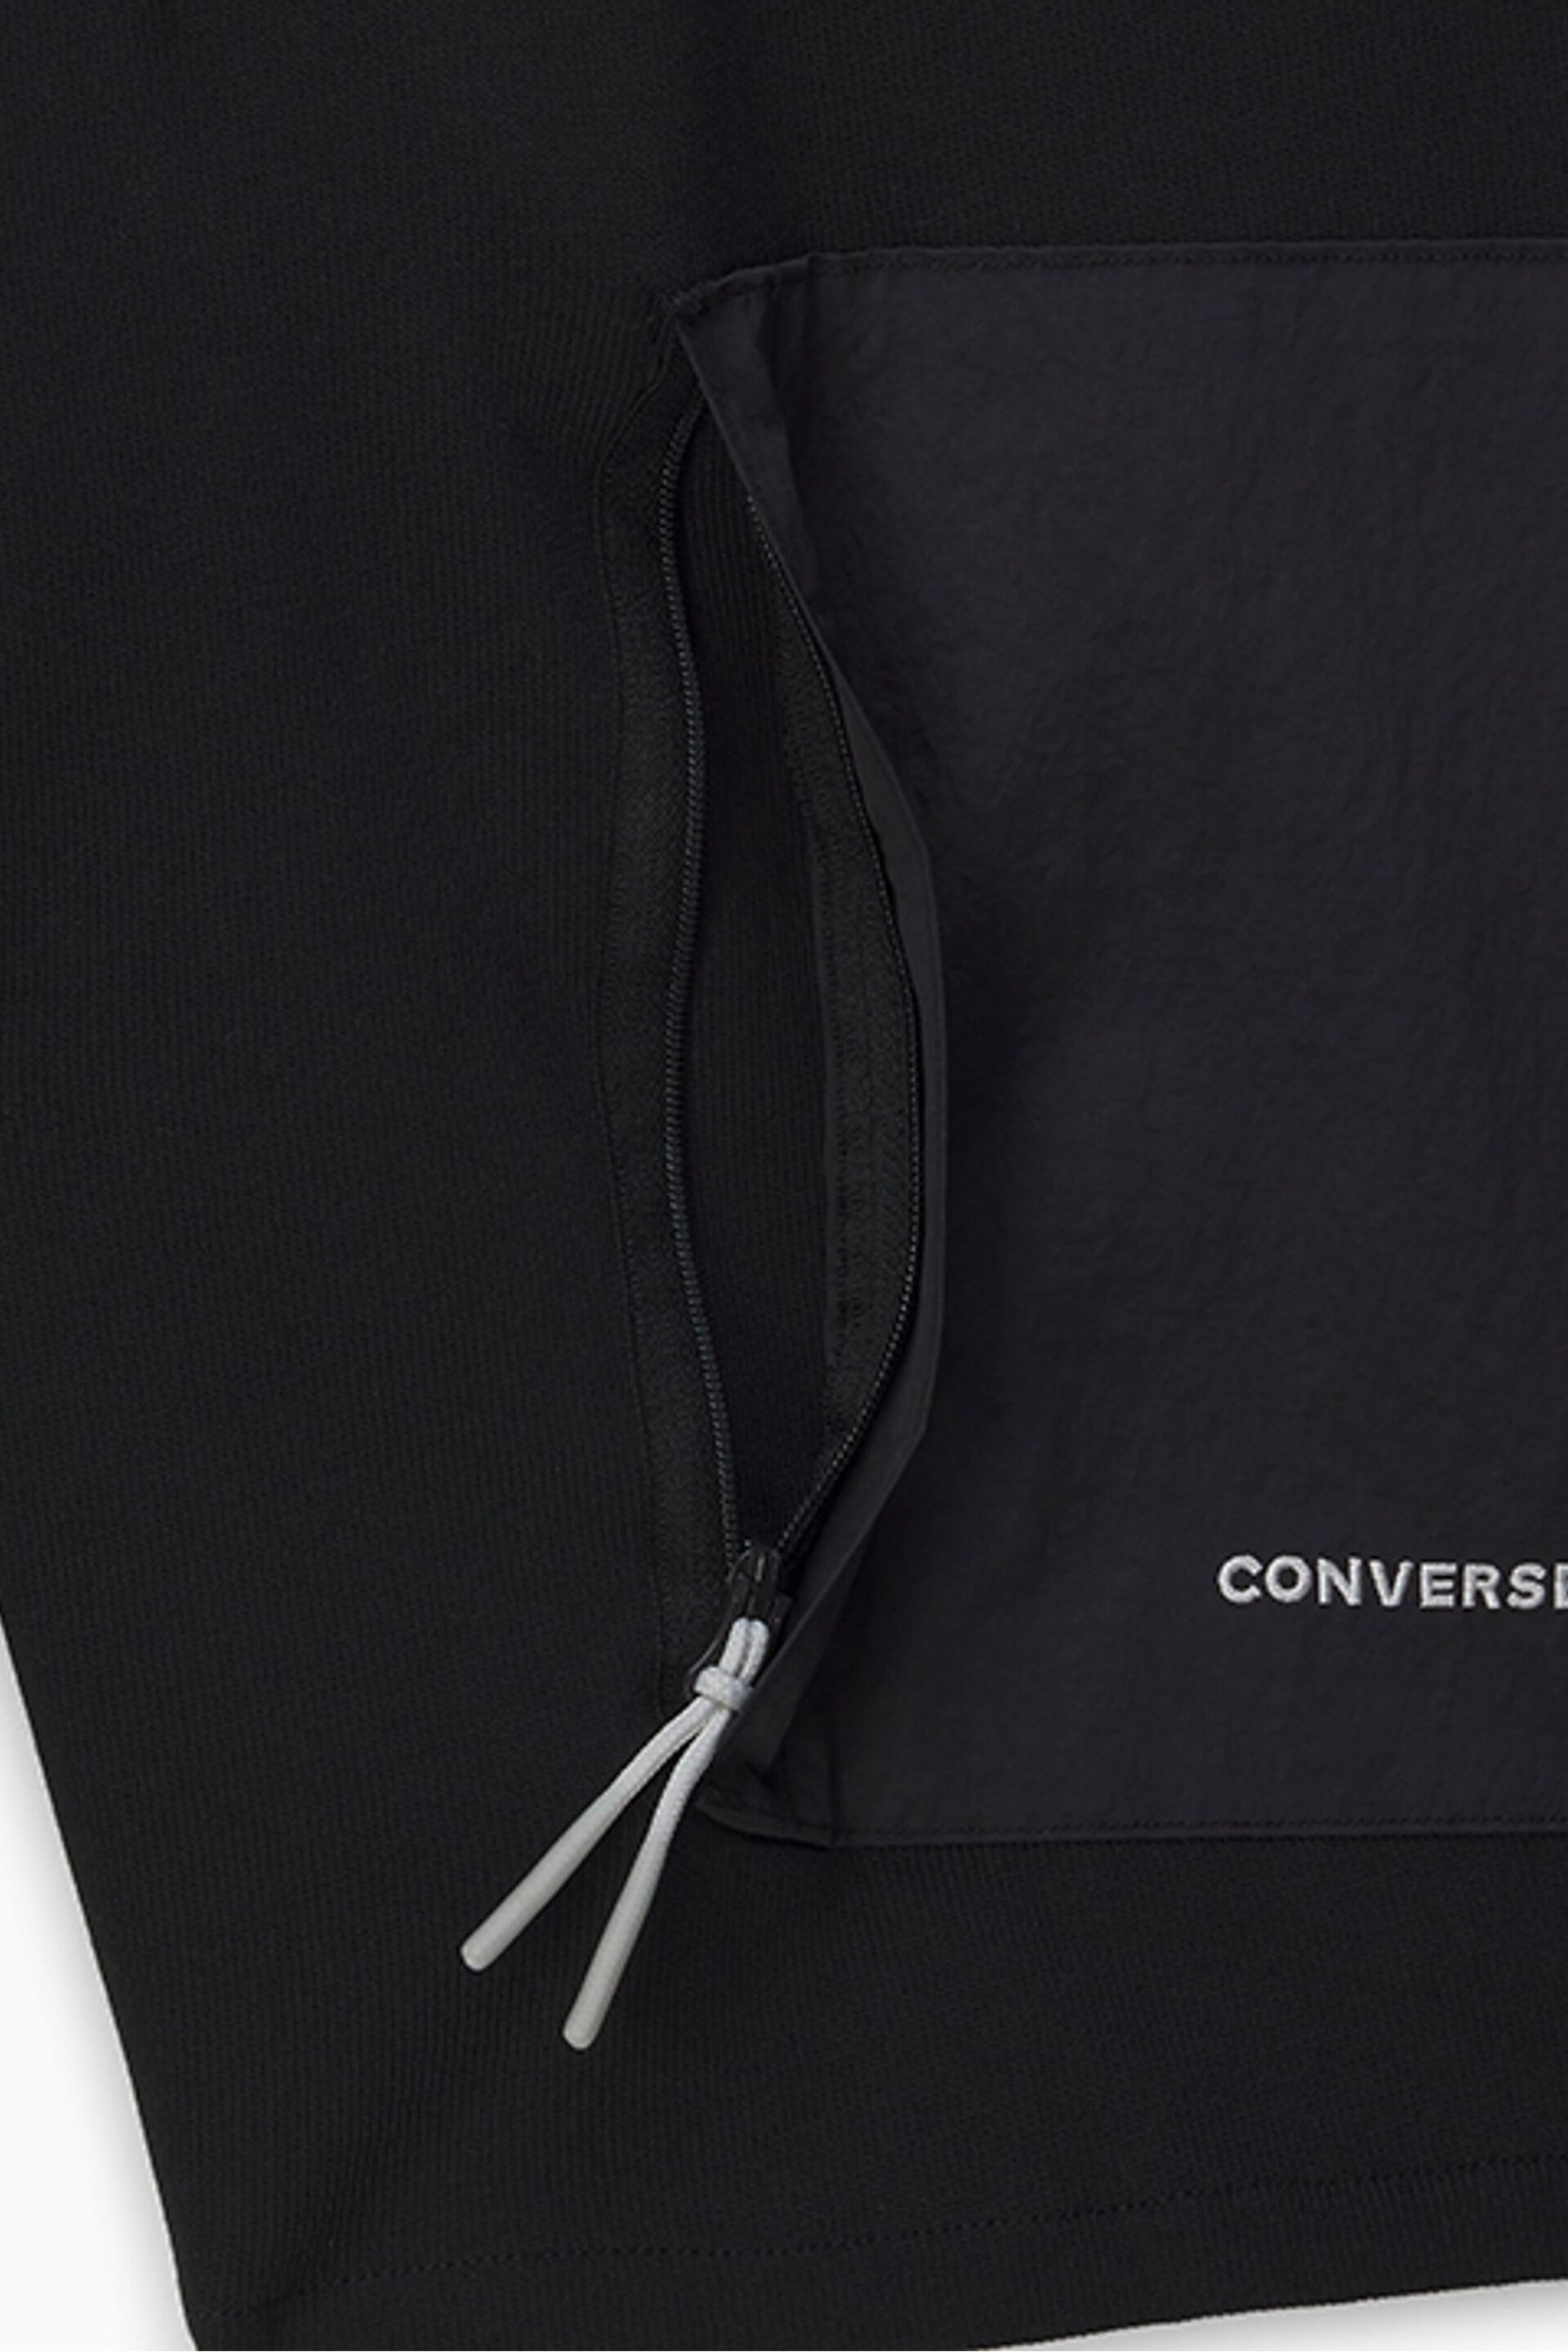 Converse Black Wordmark Utility Shorts - Image 6 of 6